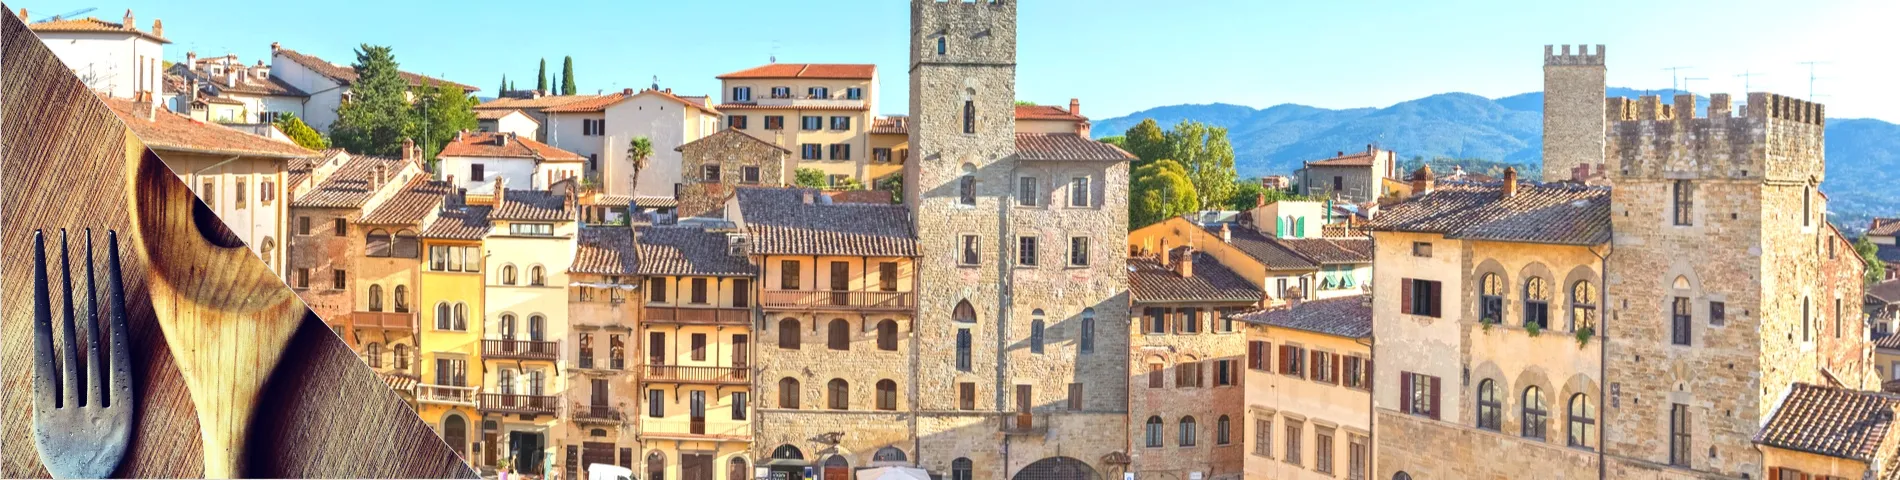 Arezzo - Italià i Cuina